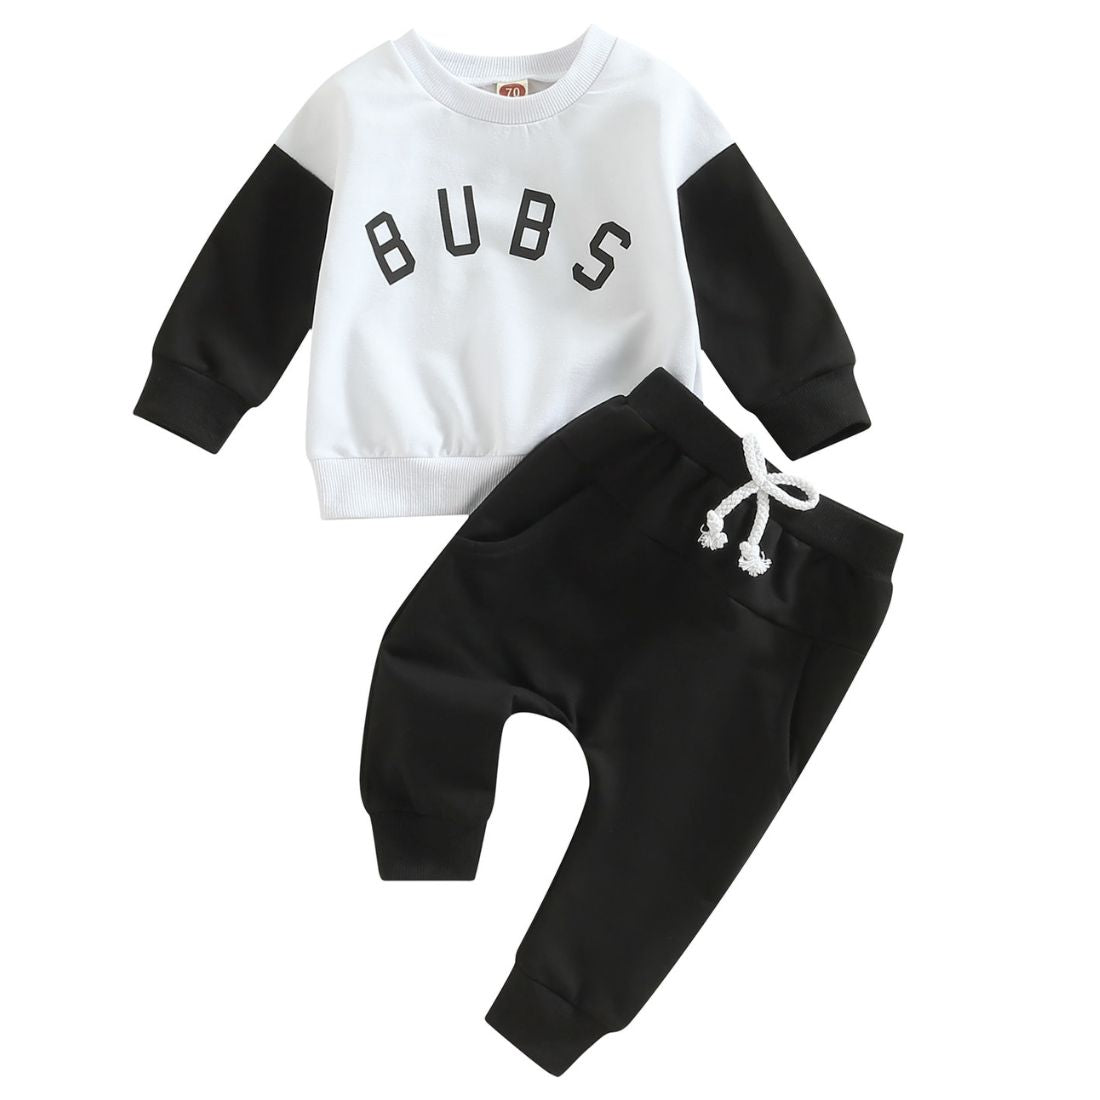 Bubs Sweat Baby Clothing Set